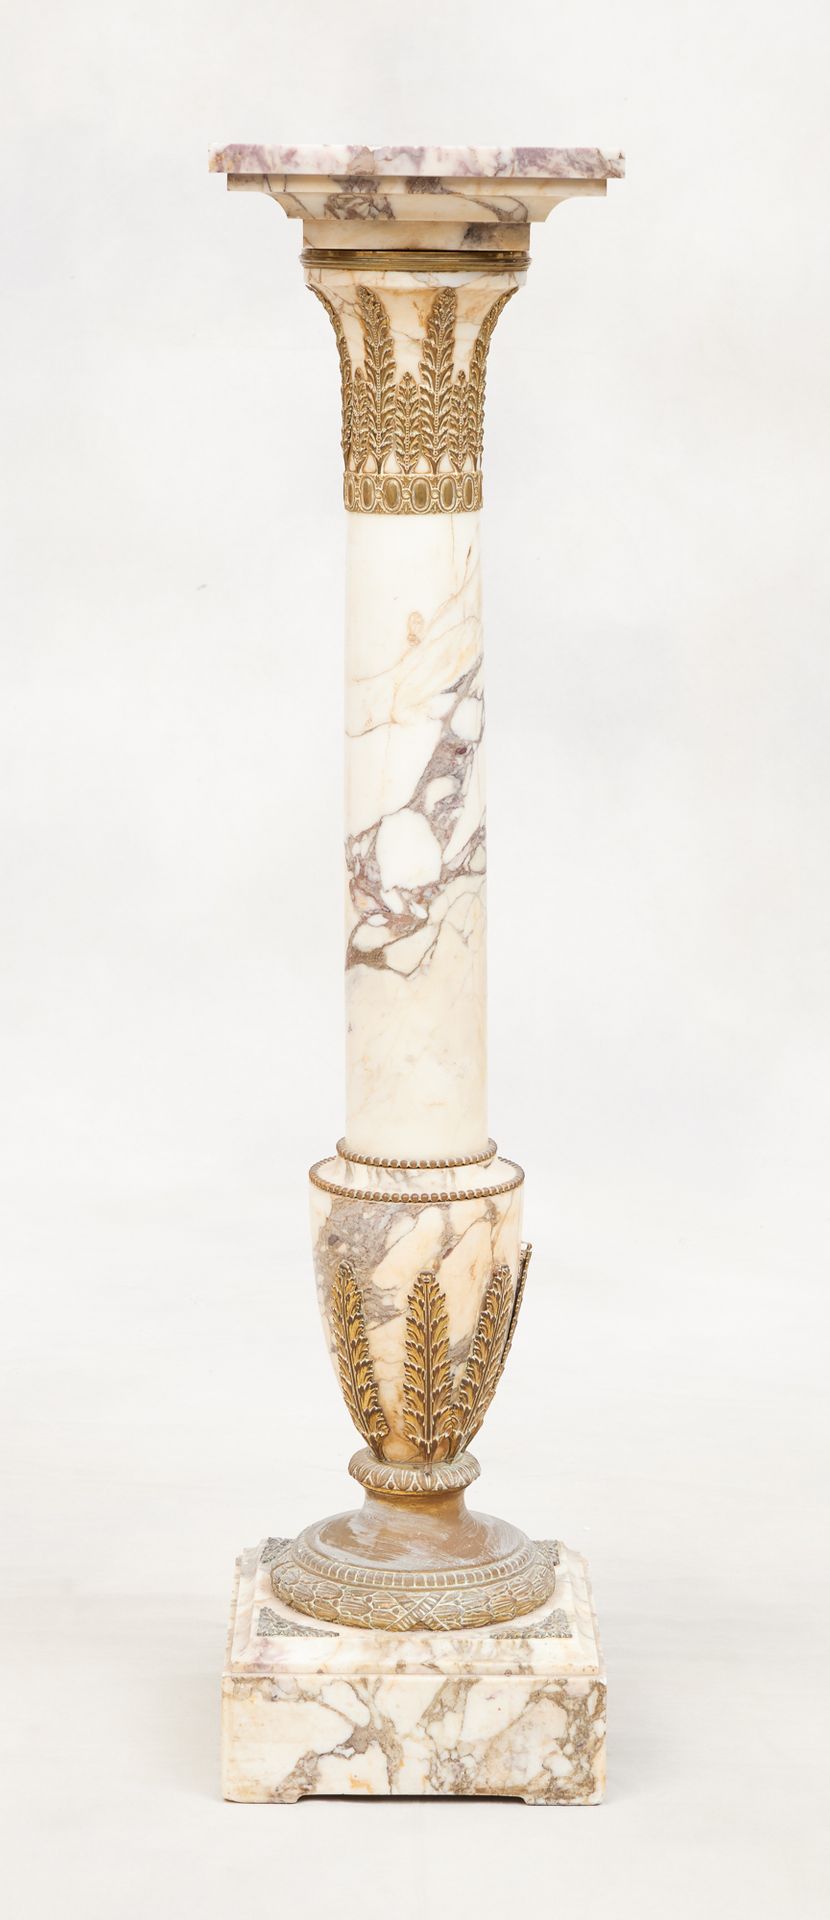 Circa 1900. Möbel: Marmorsäule mit vergoldeten Bronzehöhungen.
Maße: H.: 112 cm.